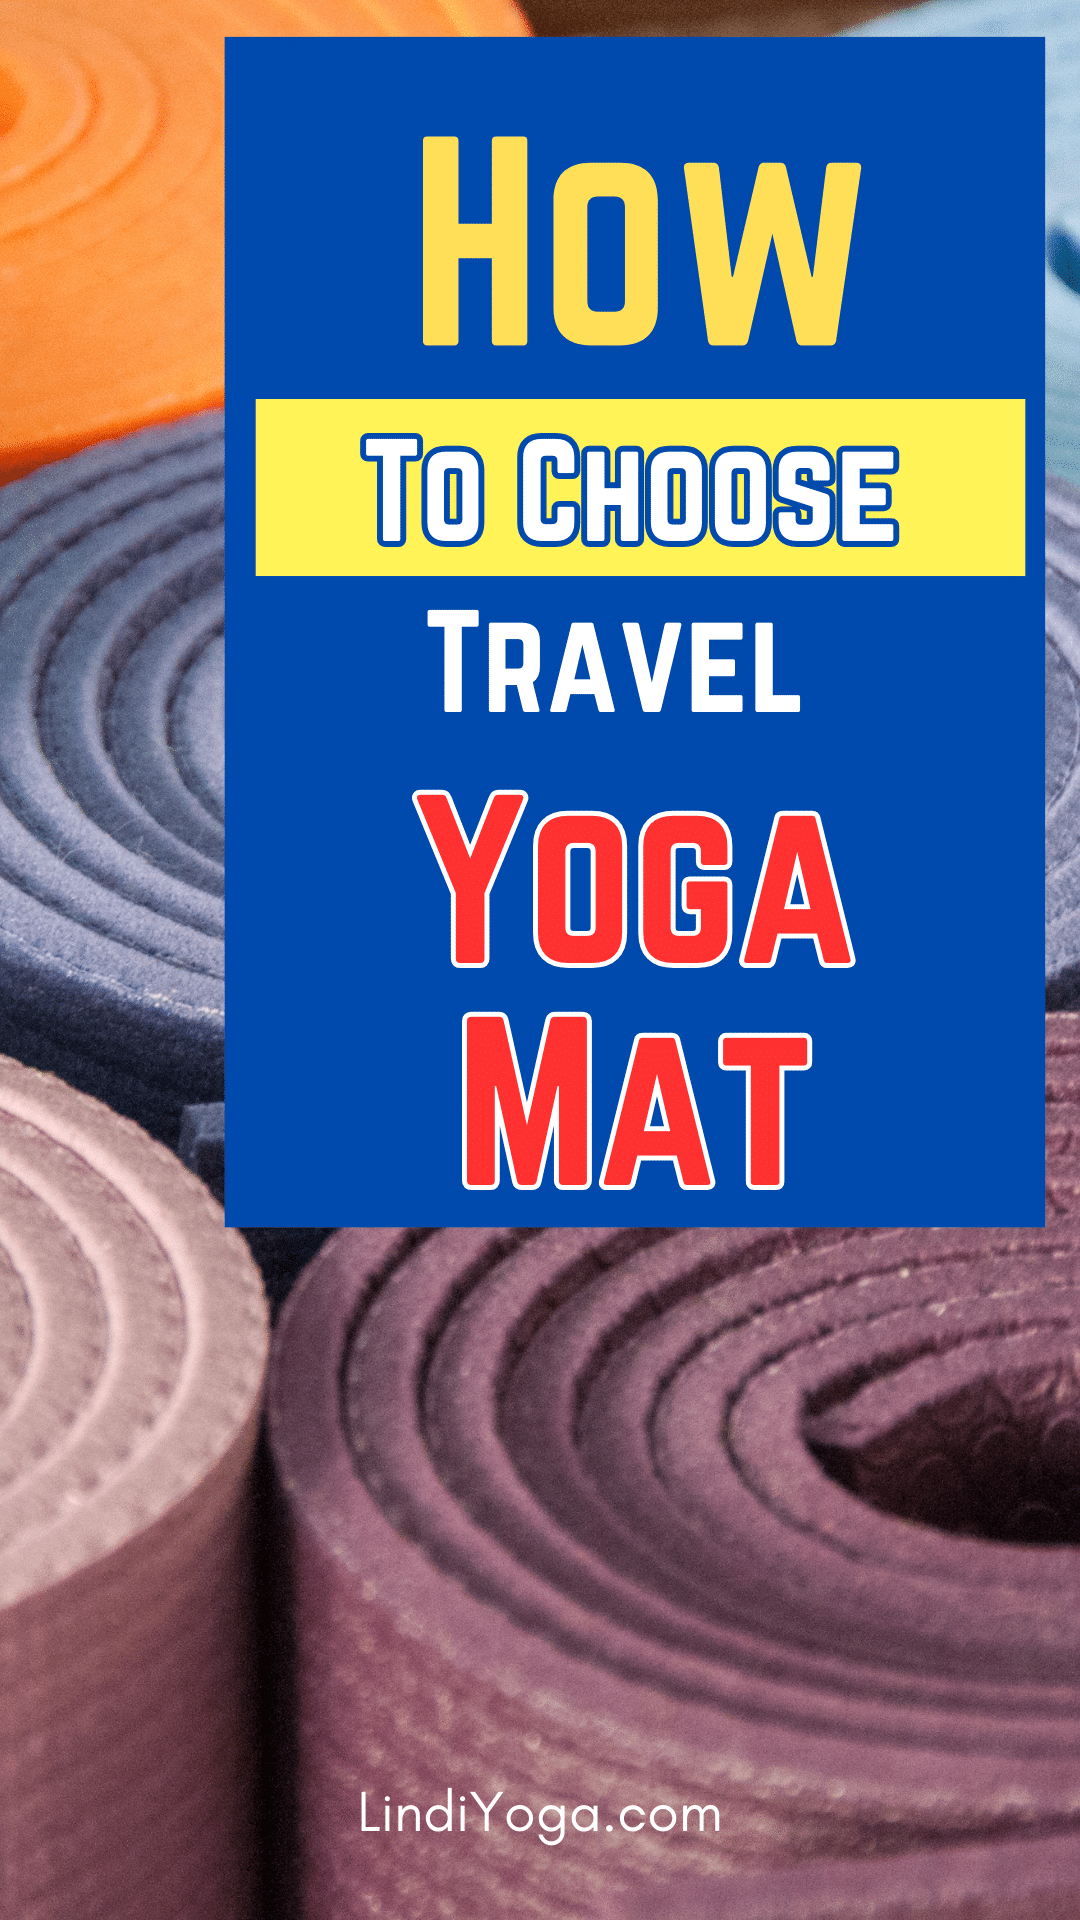 How To Choose TRavel Yoga Mat / Canva